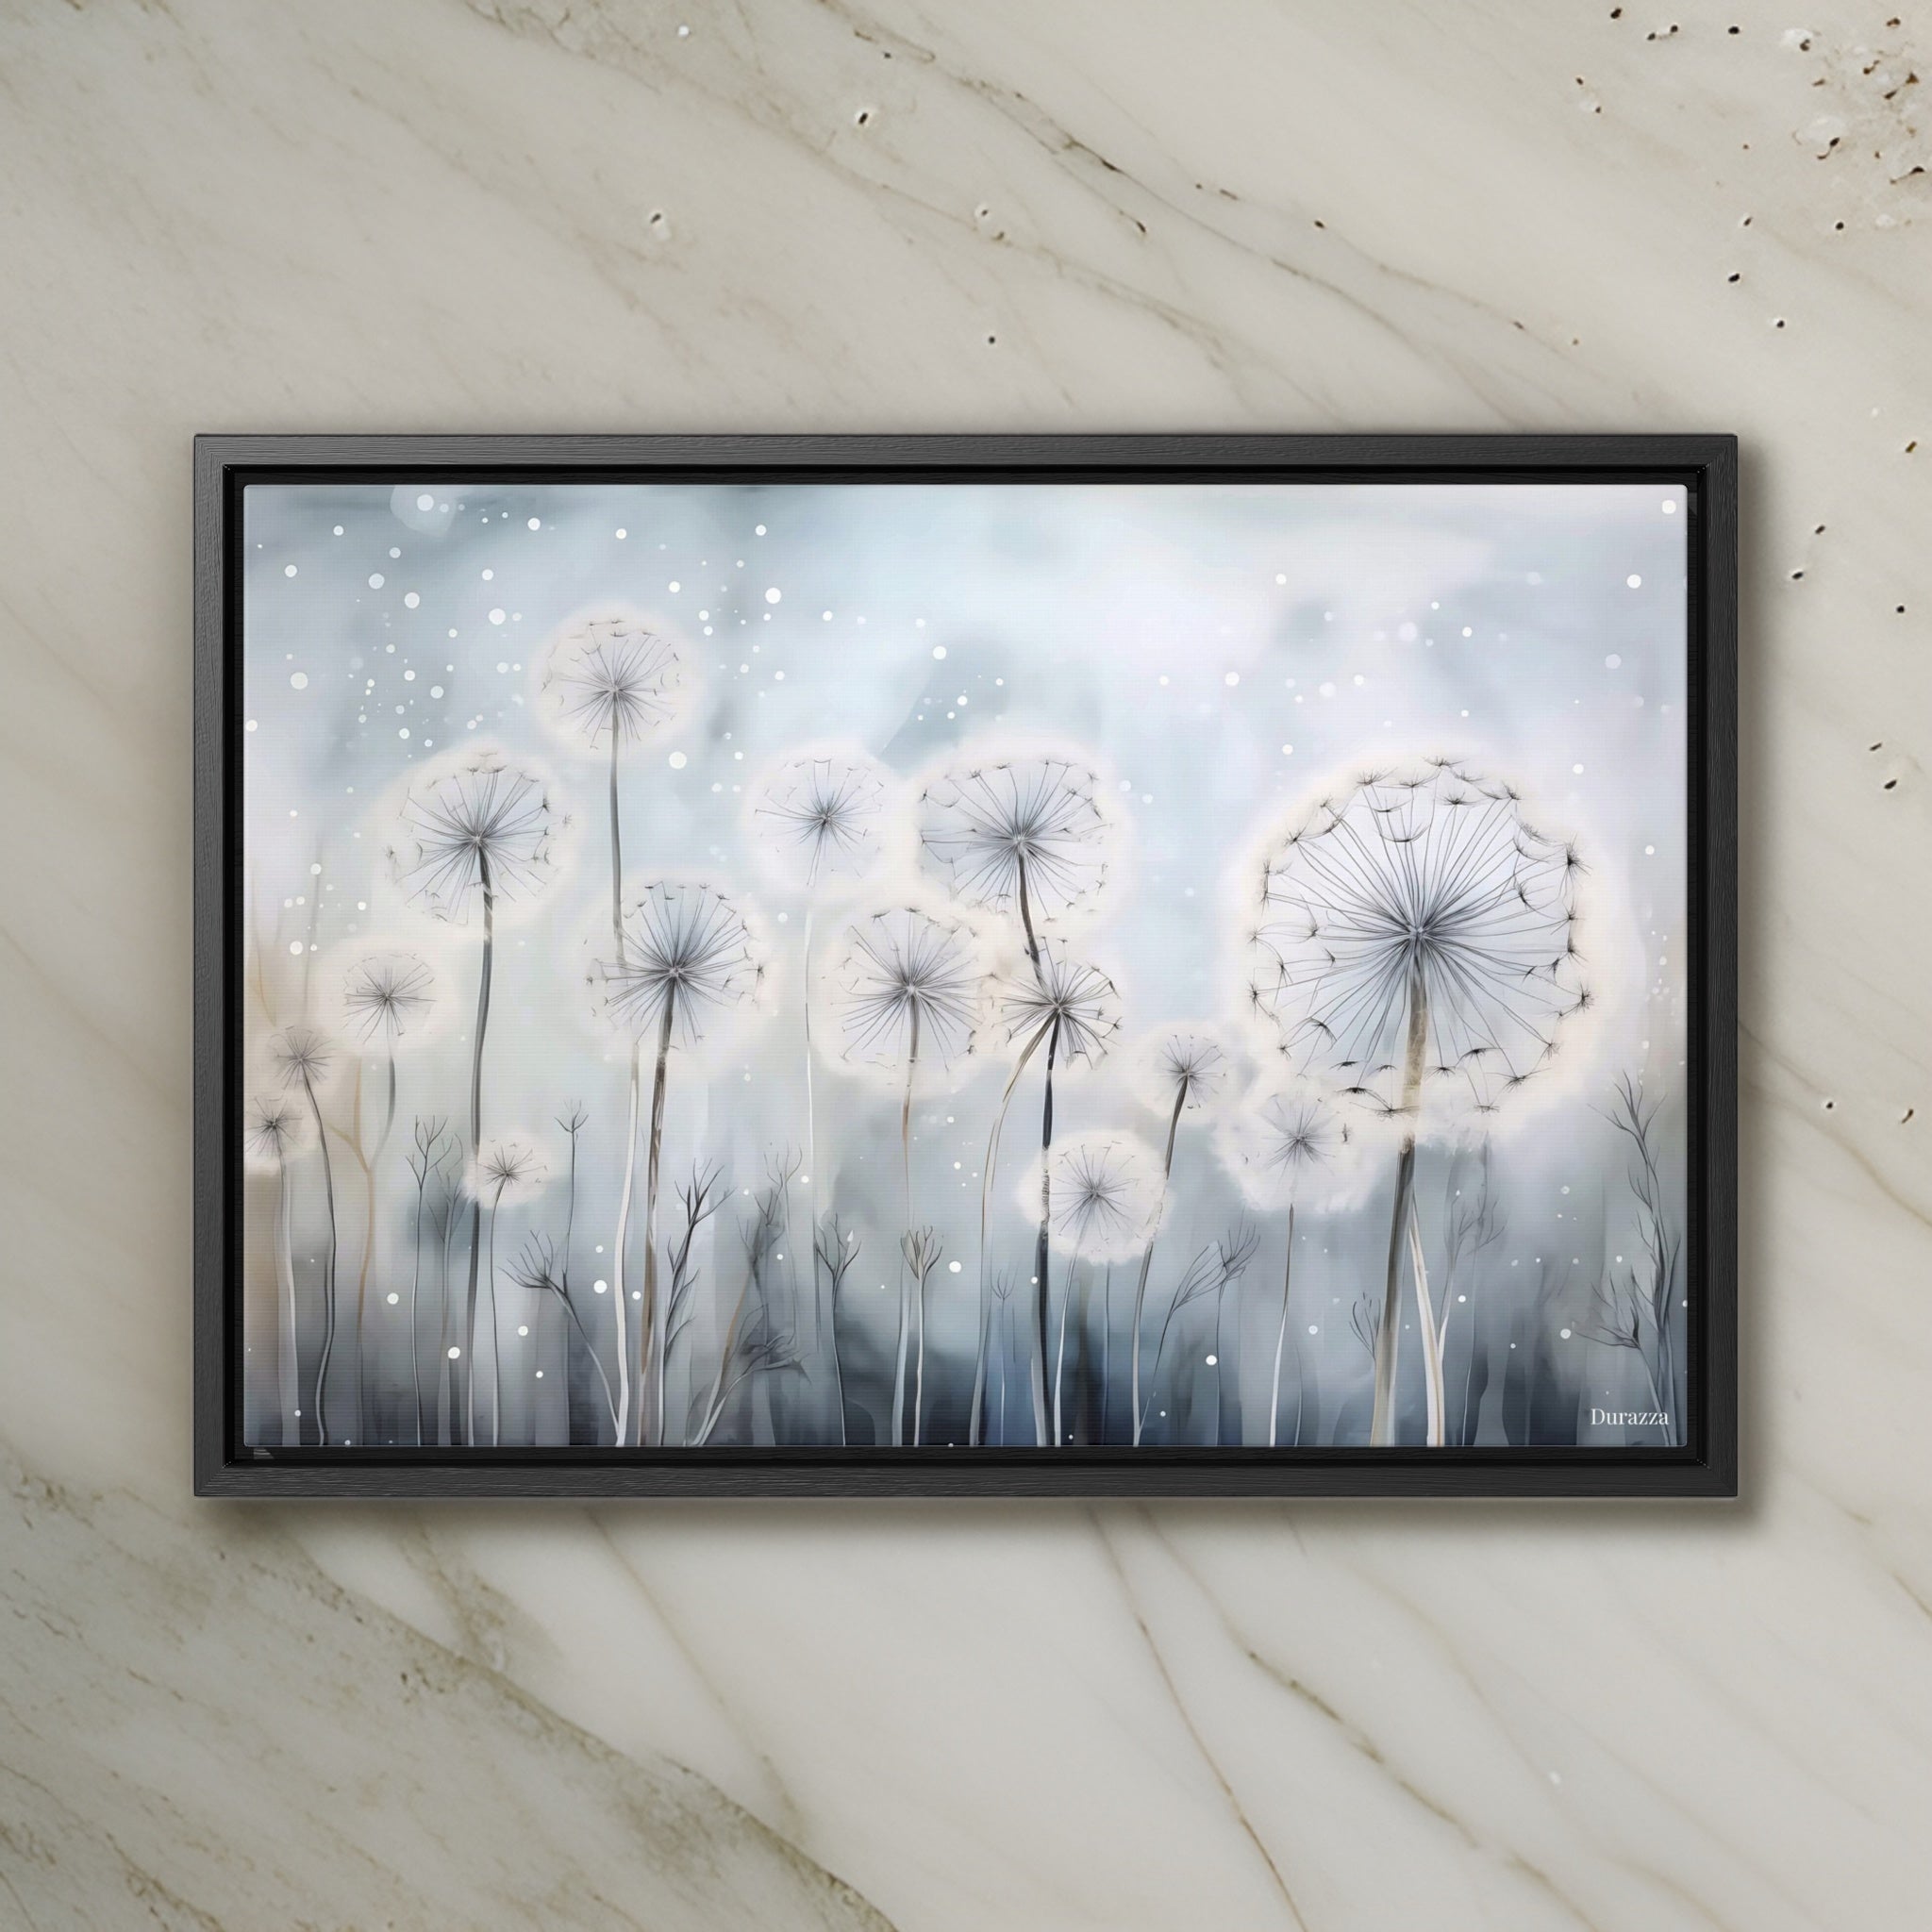 Dreamy Dandelion Artwork: White Flowers on a Serene Teal Backdrop